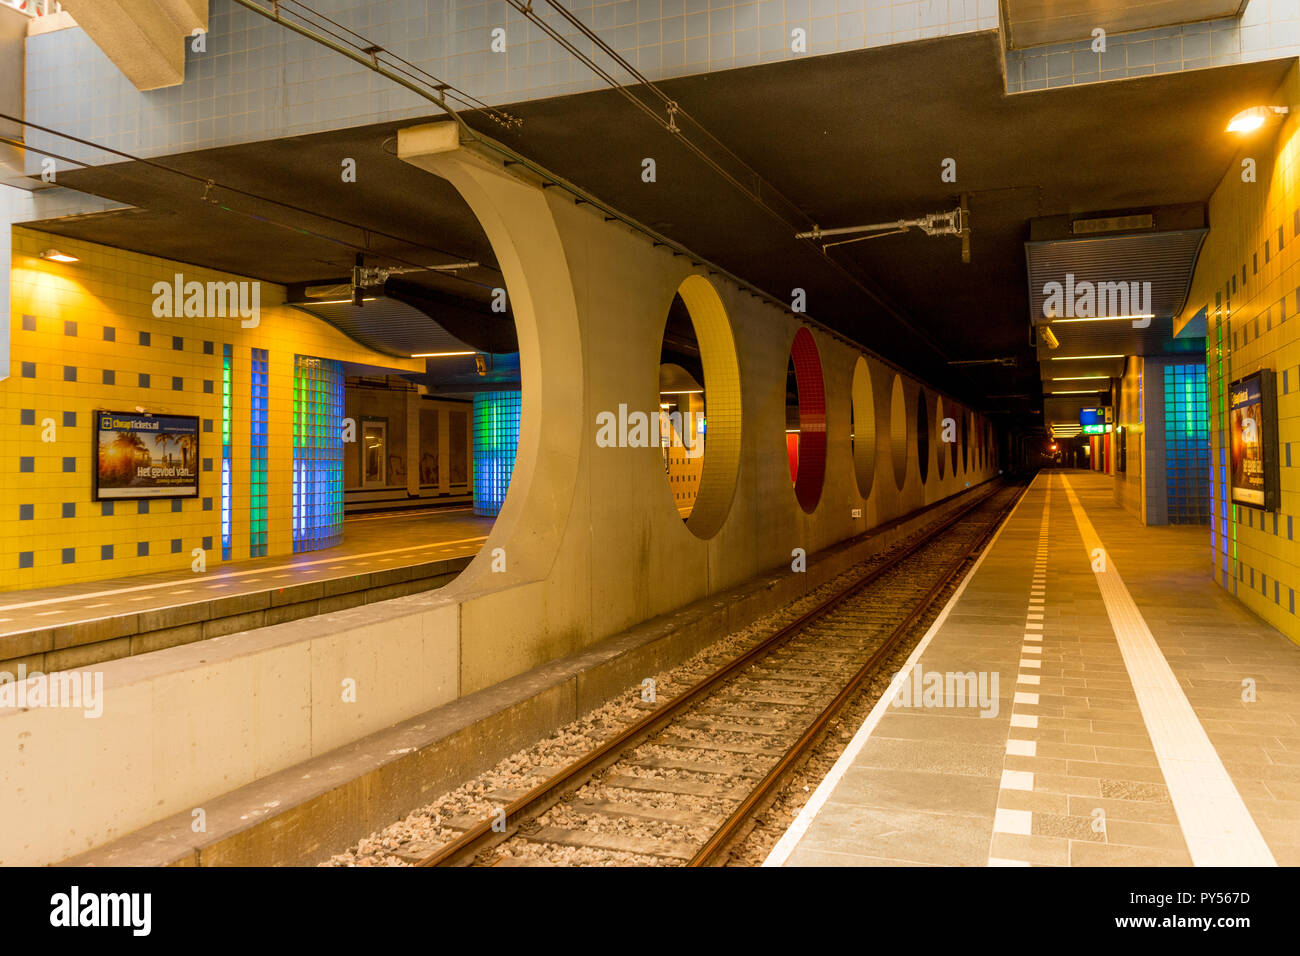 Europe, Netherlands, Rotterdam, a subway train at a train station Stock Photo